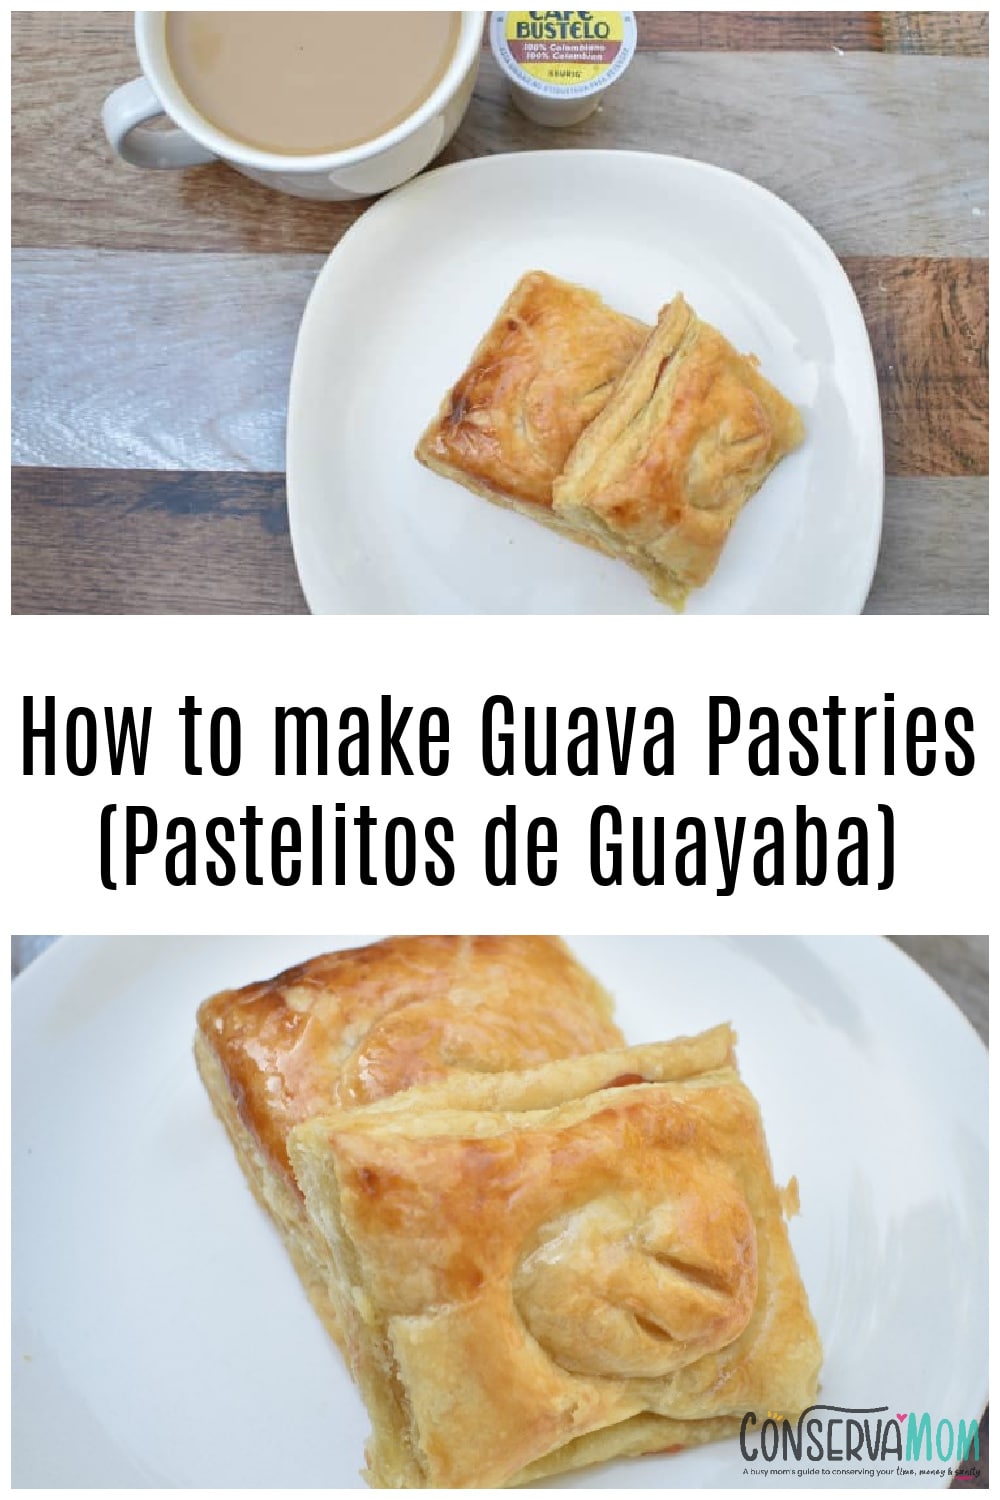 How to make Guava Pastries (Pastelitos de Guayaba)